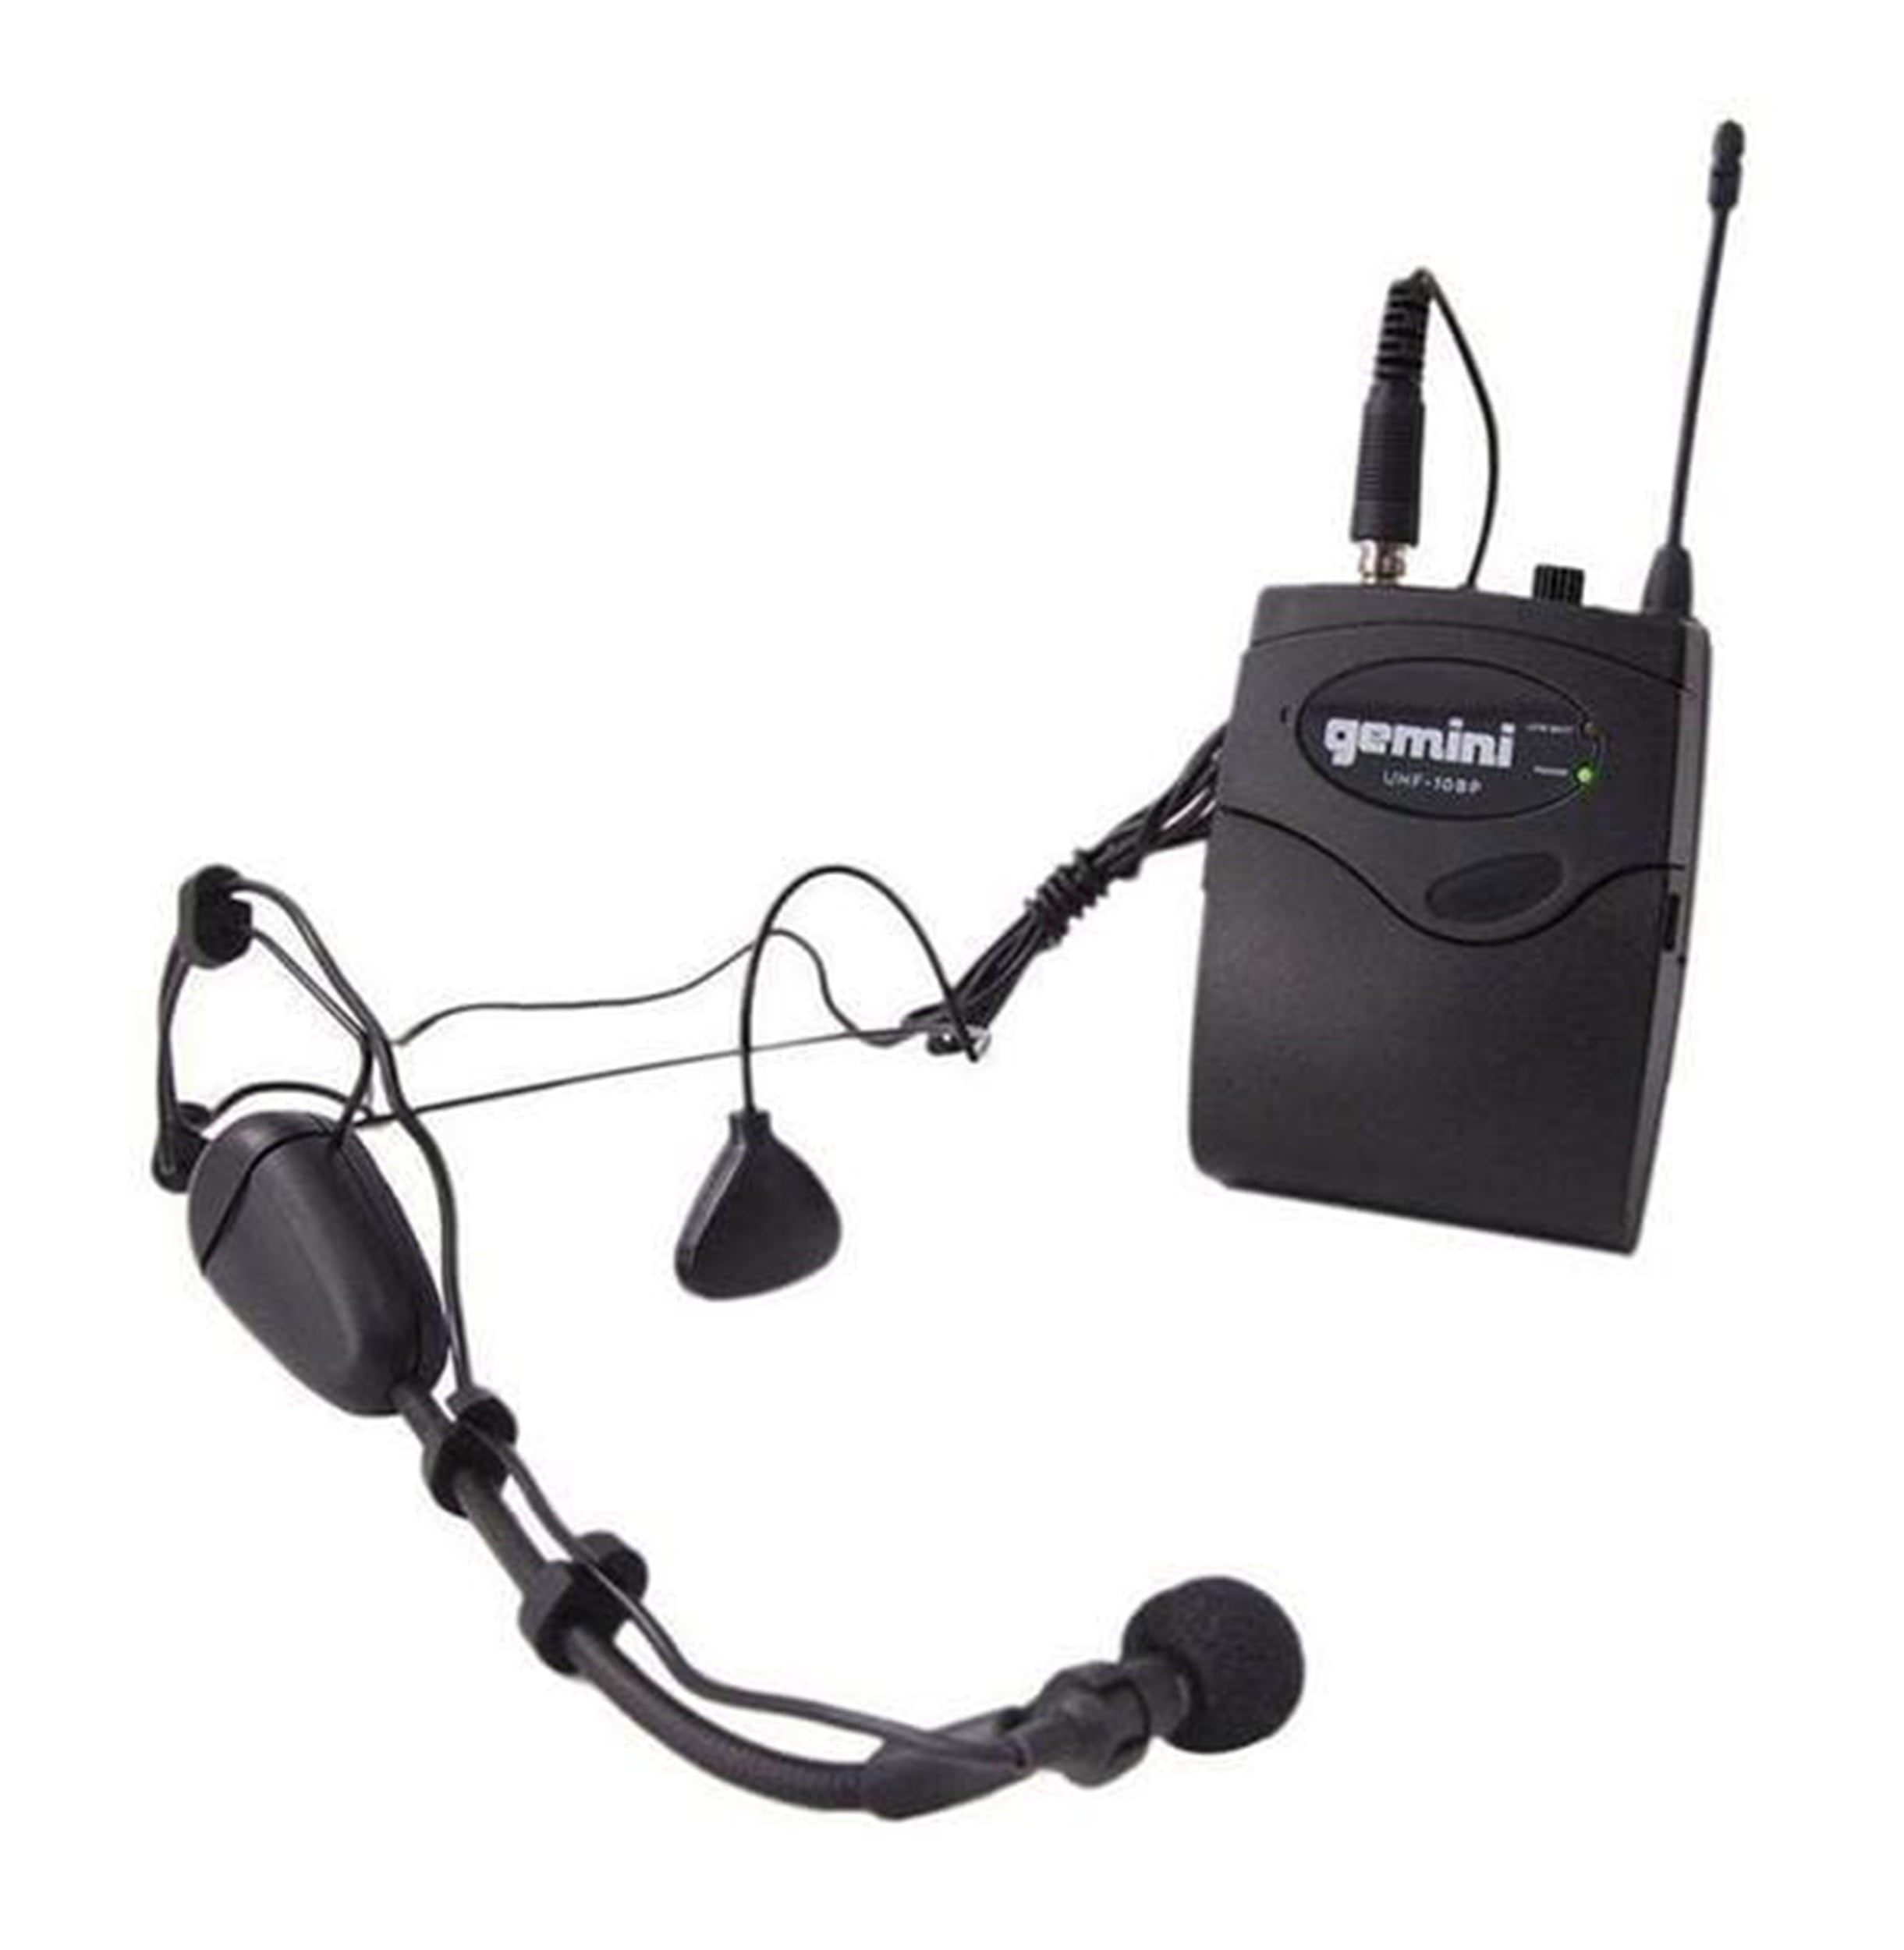 Gemini Sound UHF-01HL-F1 Wireless Microphone System - Frequency: F1 517.6 - Hollywood DJ